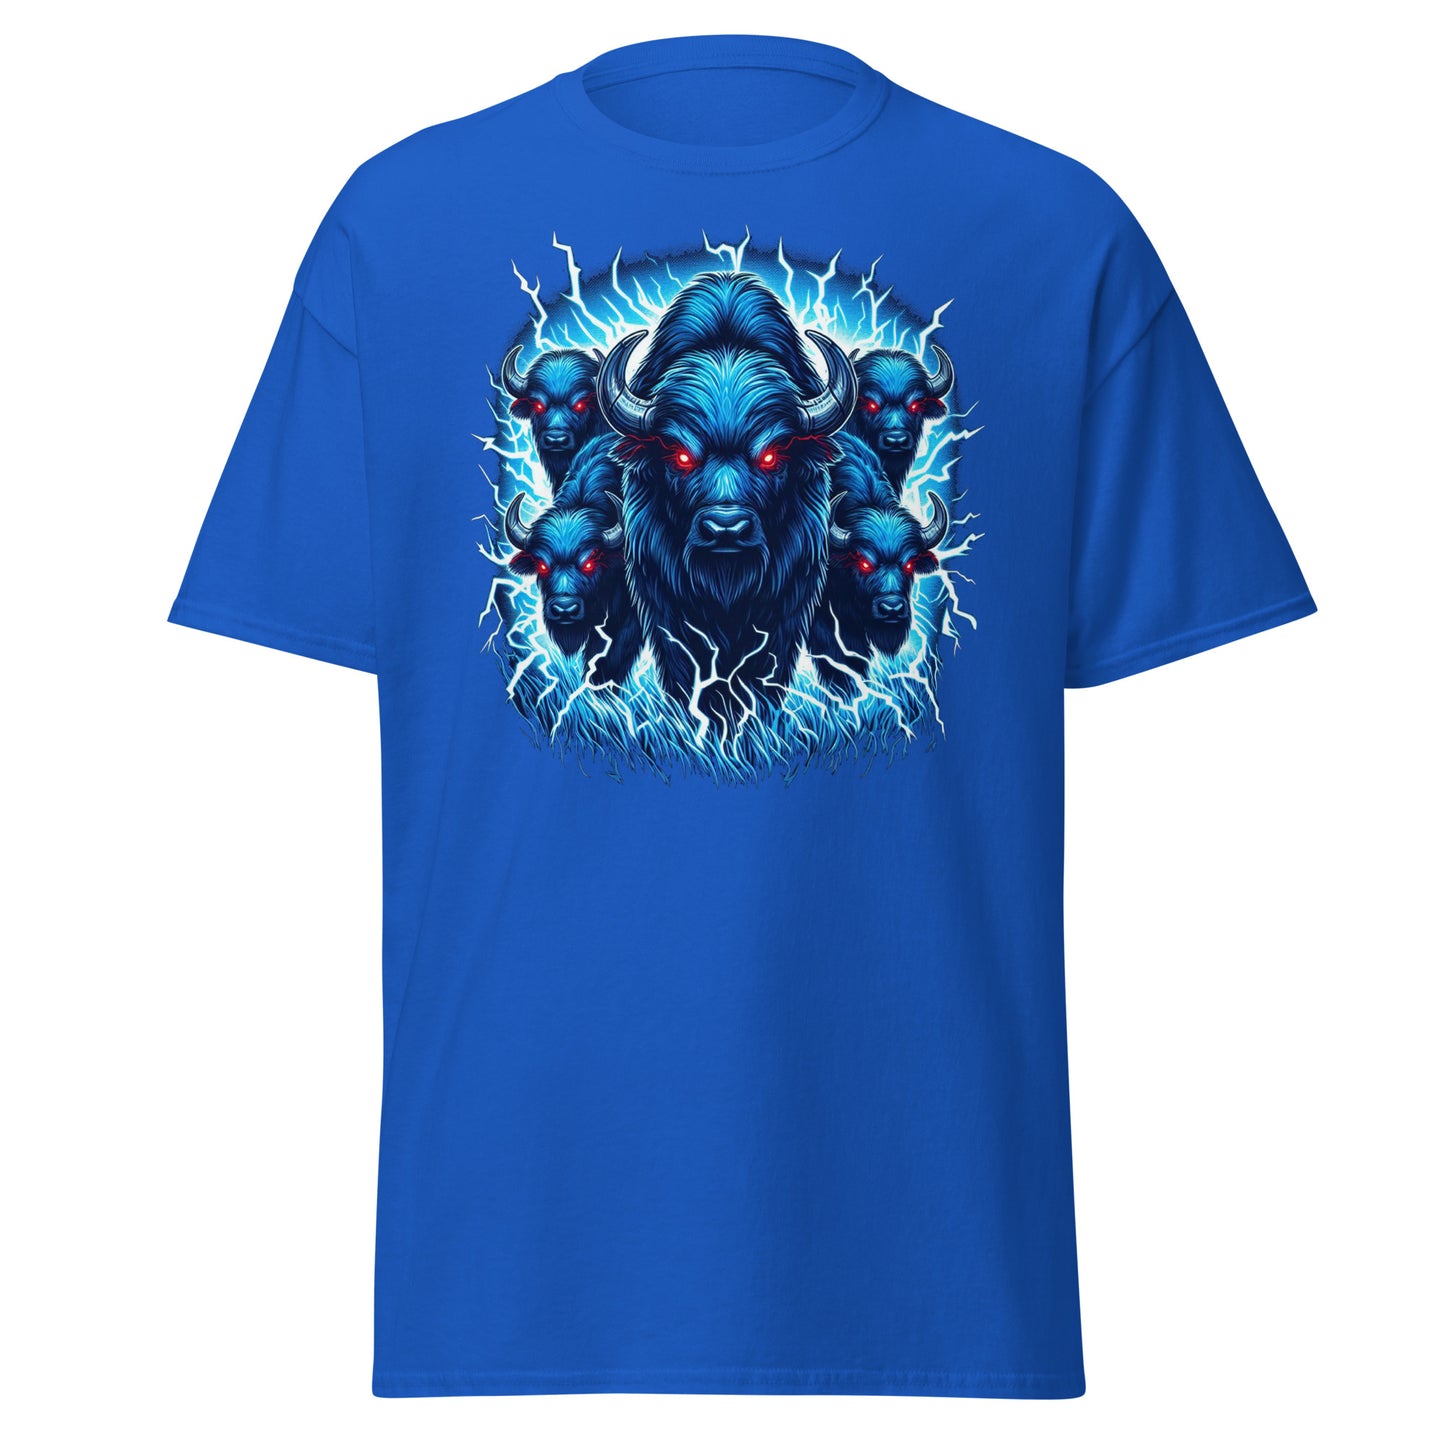 Buffalo Bills Electric Stampede: Shockwave T-Shirt - Thunderstruck Edition